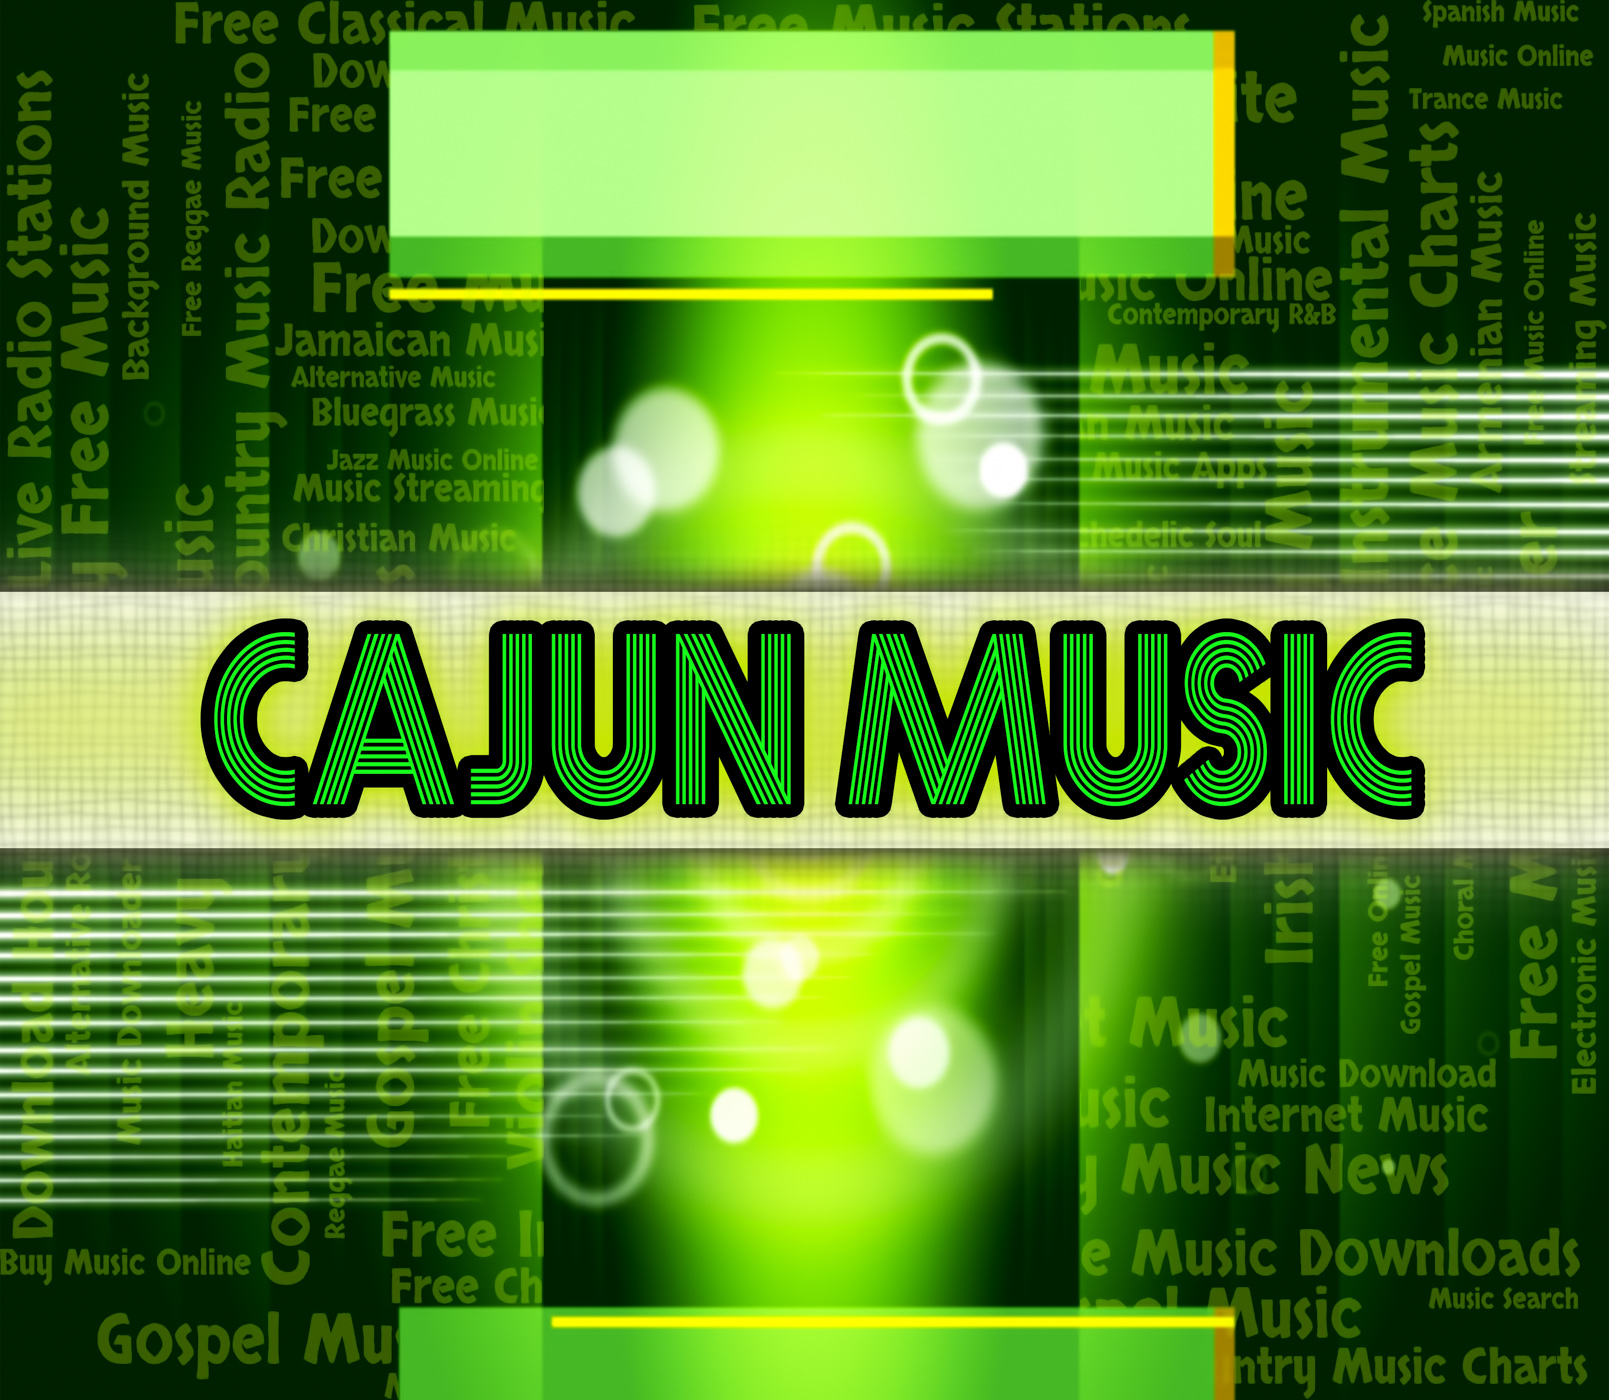 Cajun music represents sound track and cajuns photo